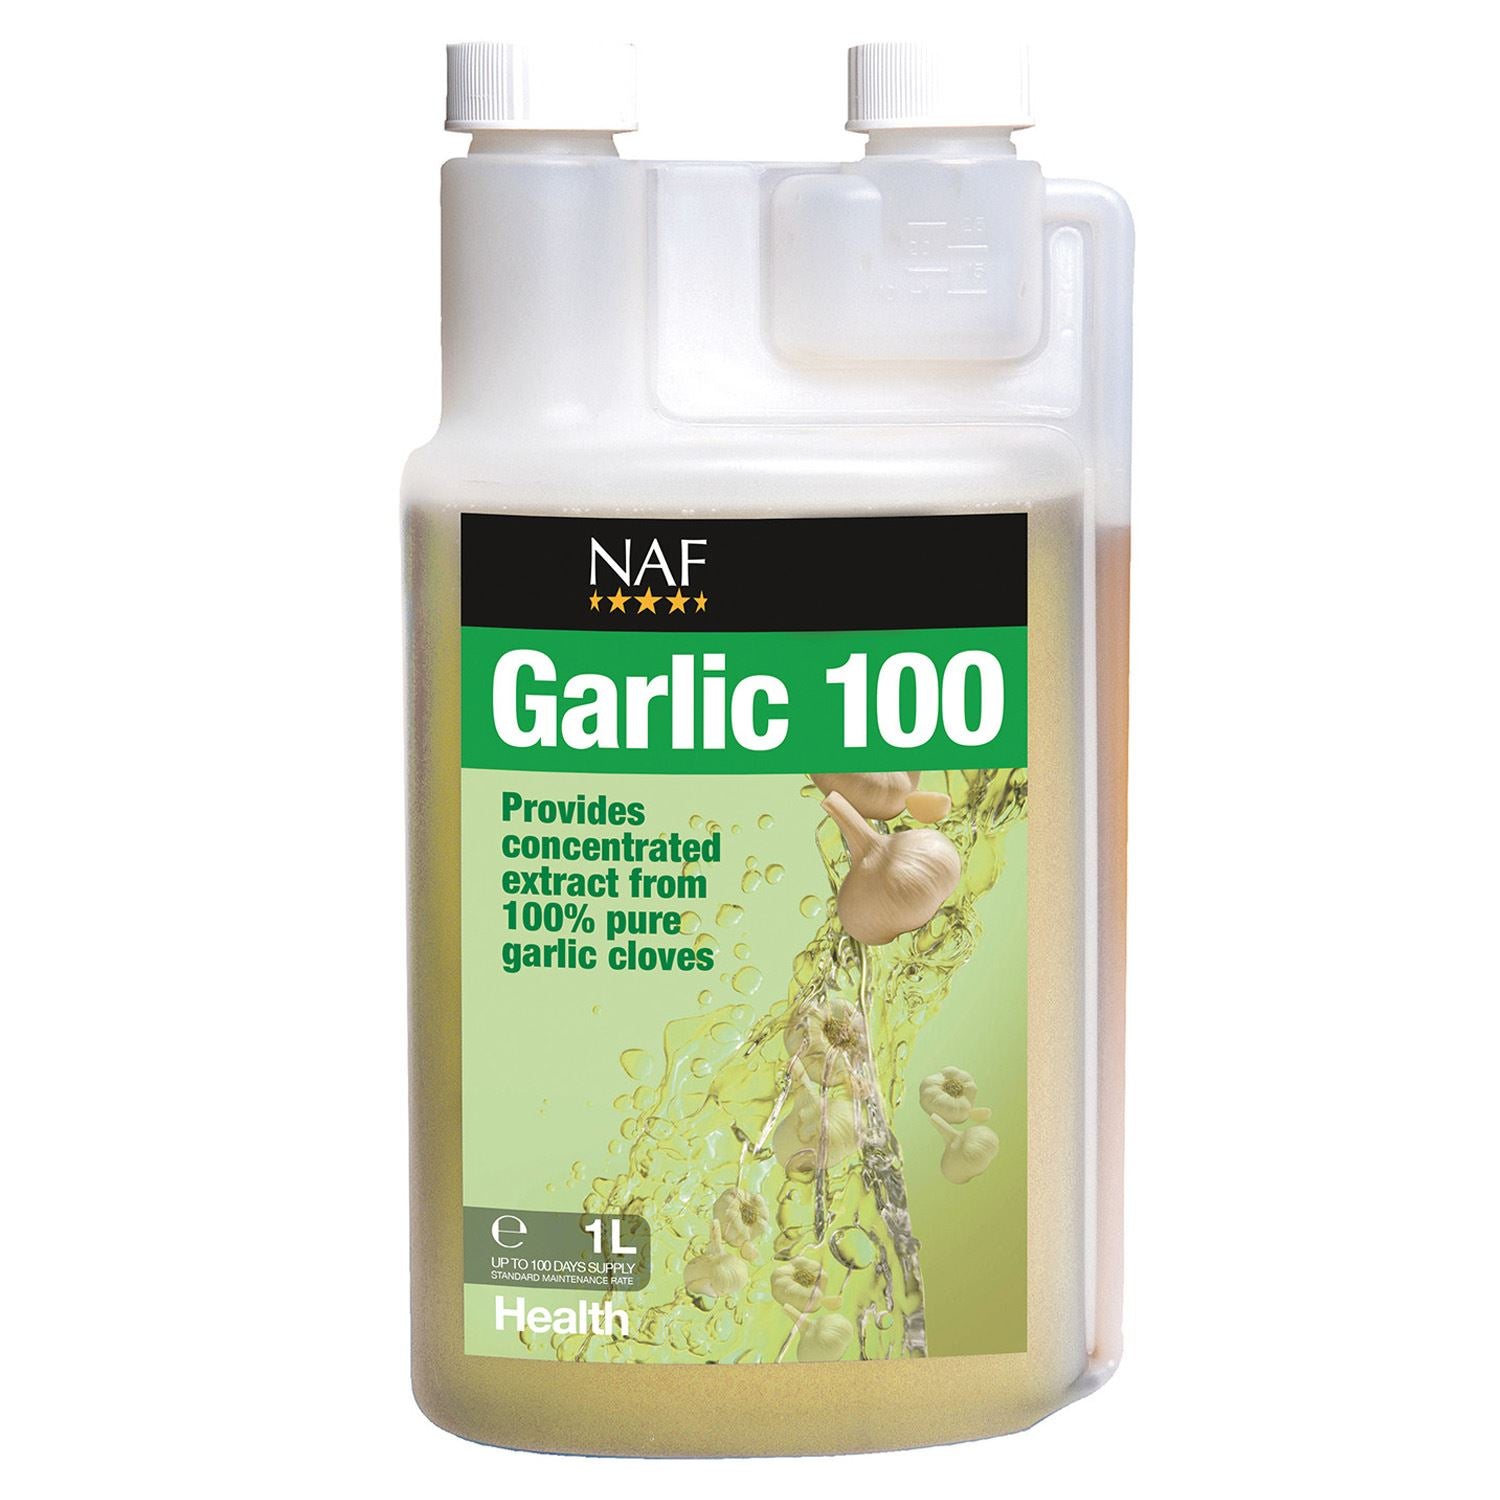 Naf Garlic 100 - Just Horse Riders